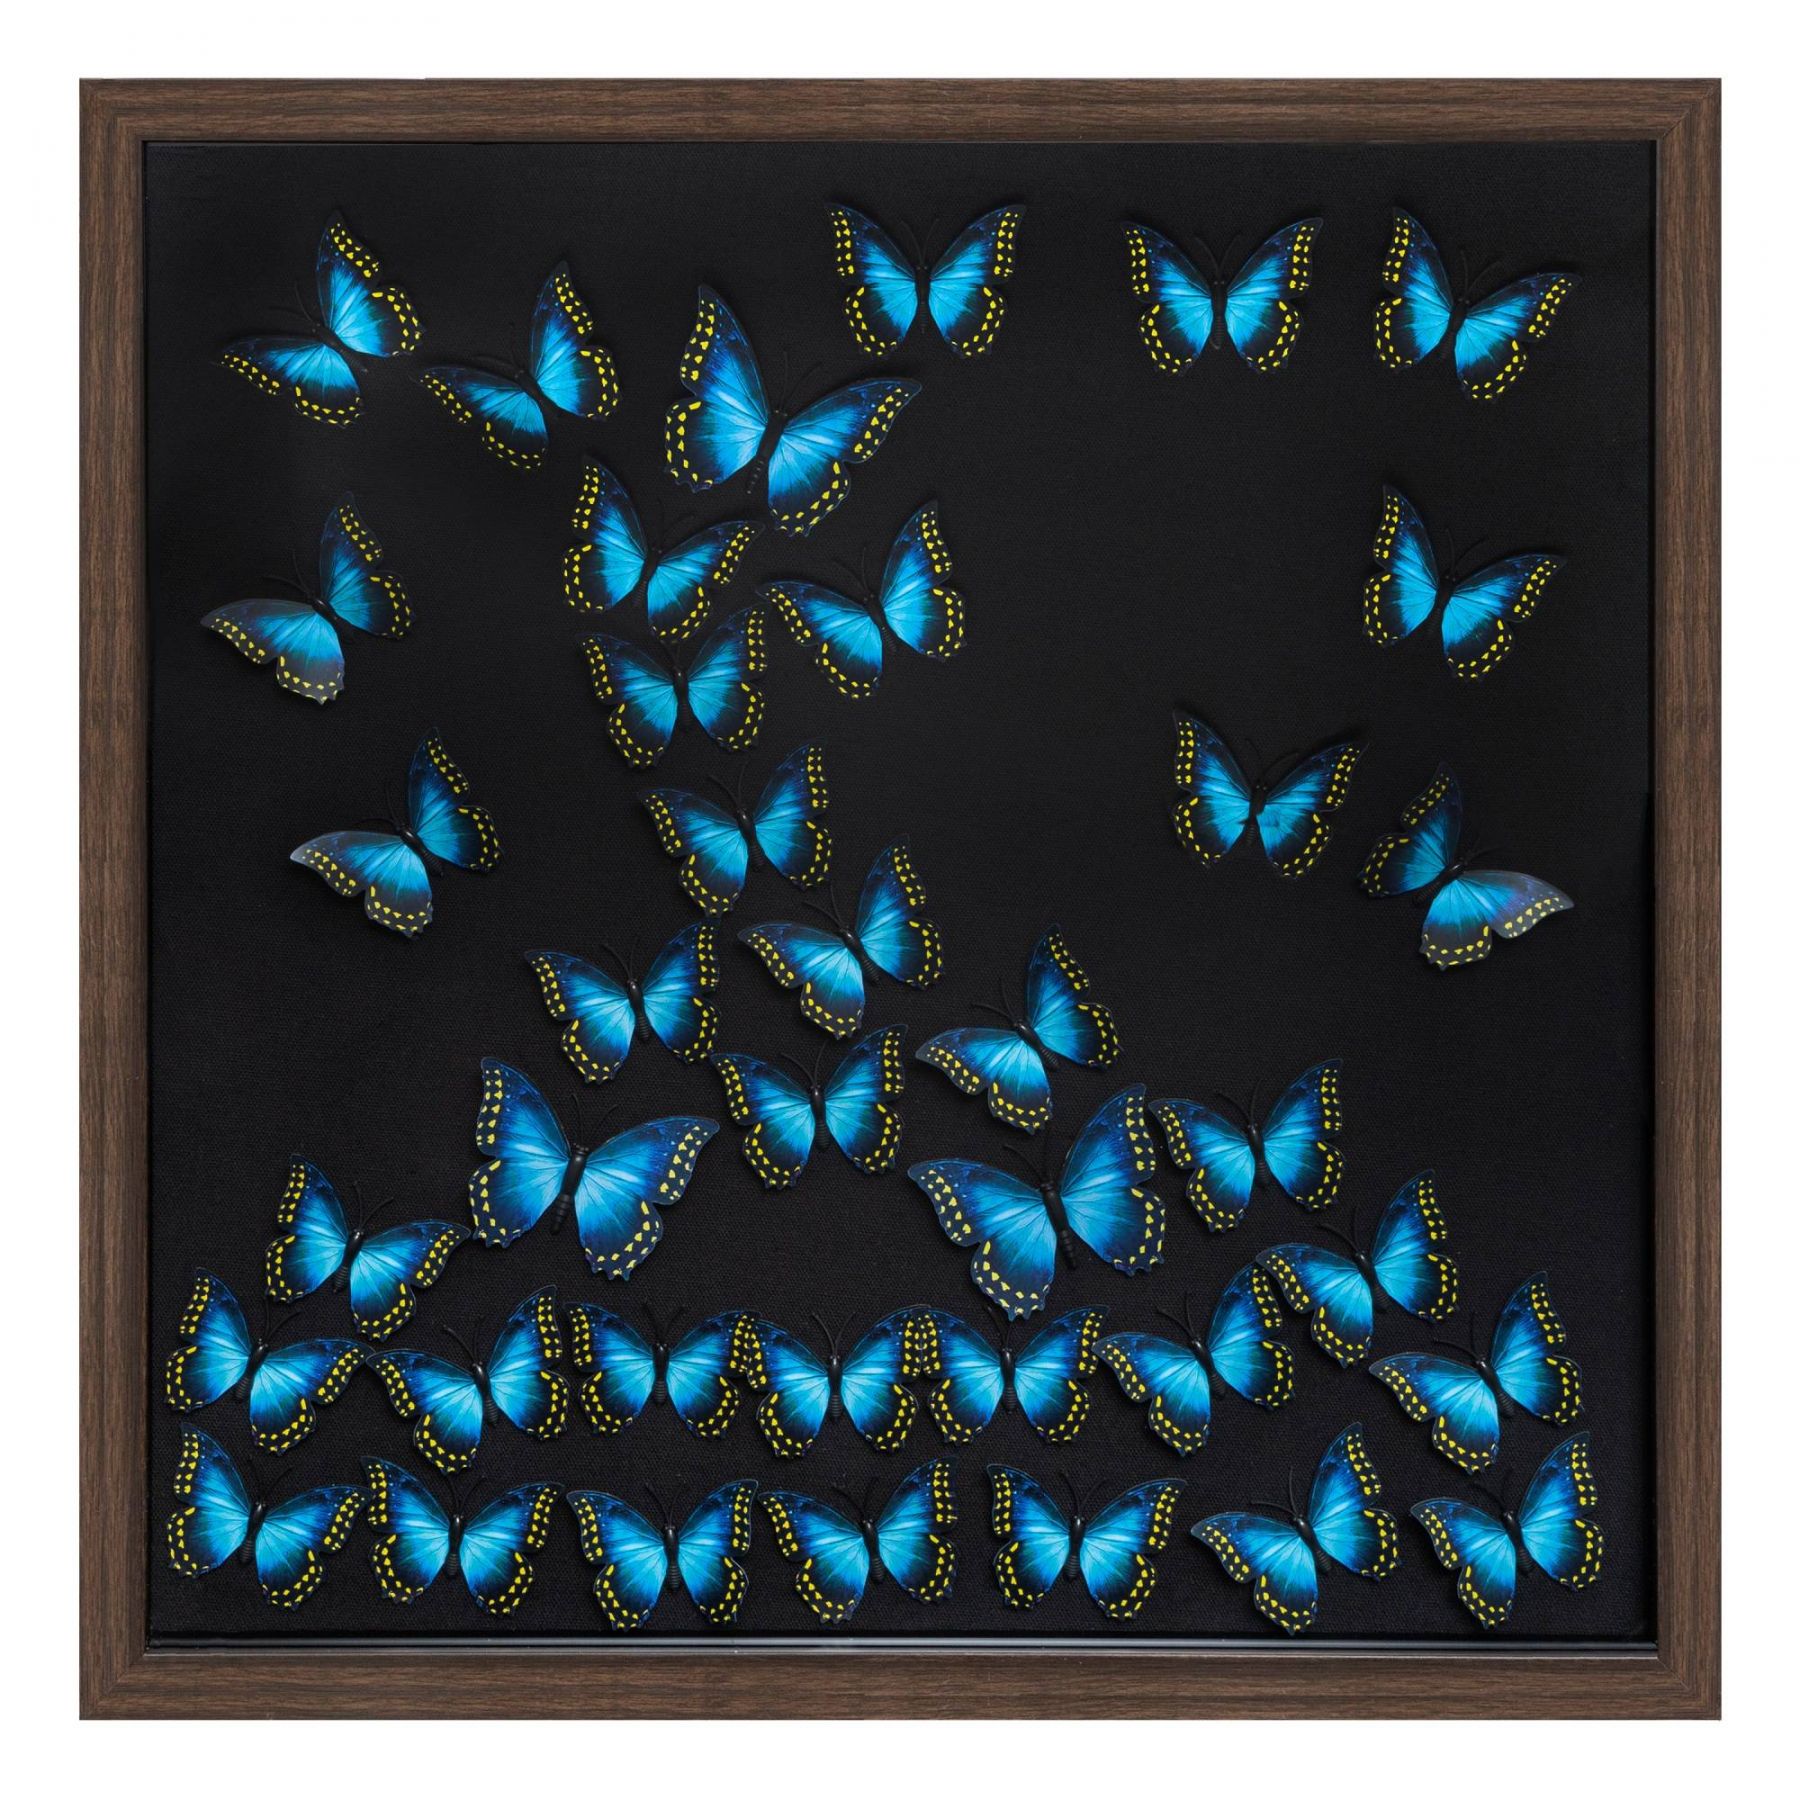 Atmosphera Nástěnná dekorace 3D s motýly, 55 x 55 cm - EDAXO.CZ s.r.o.